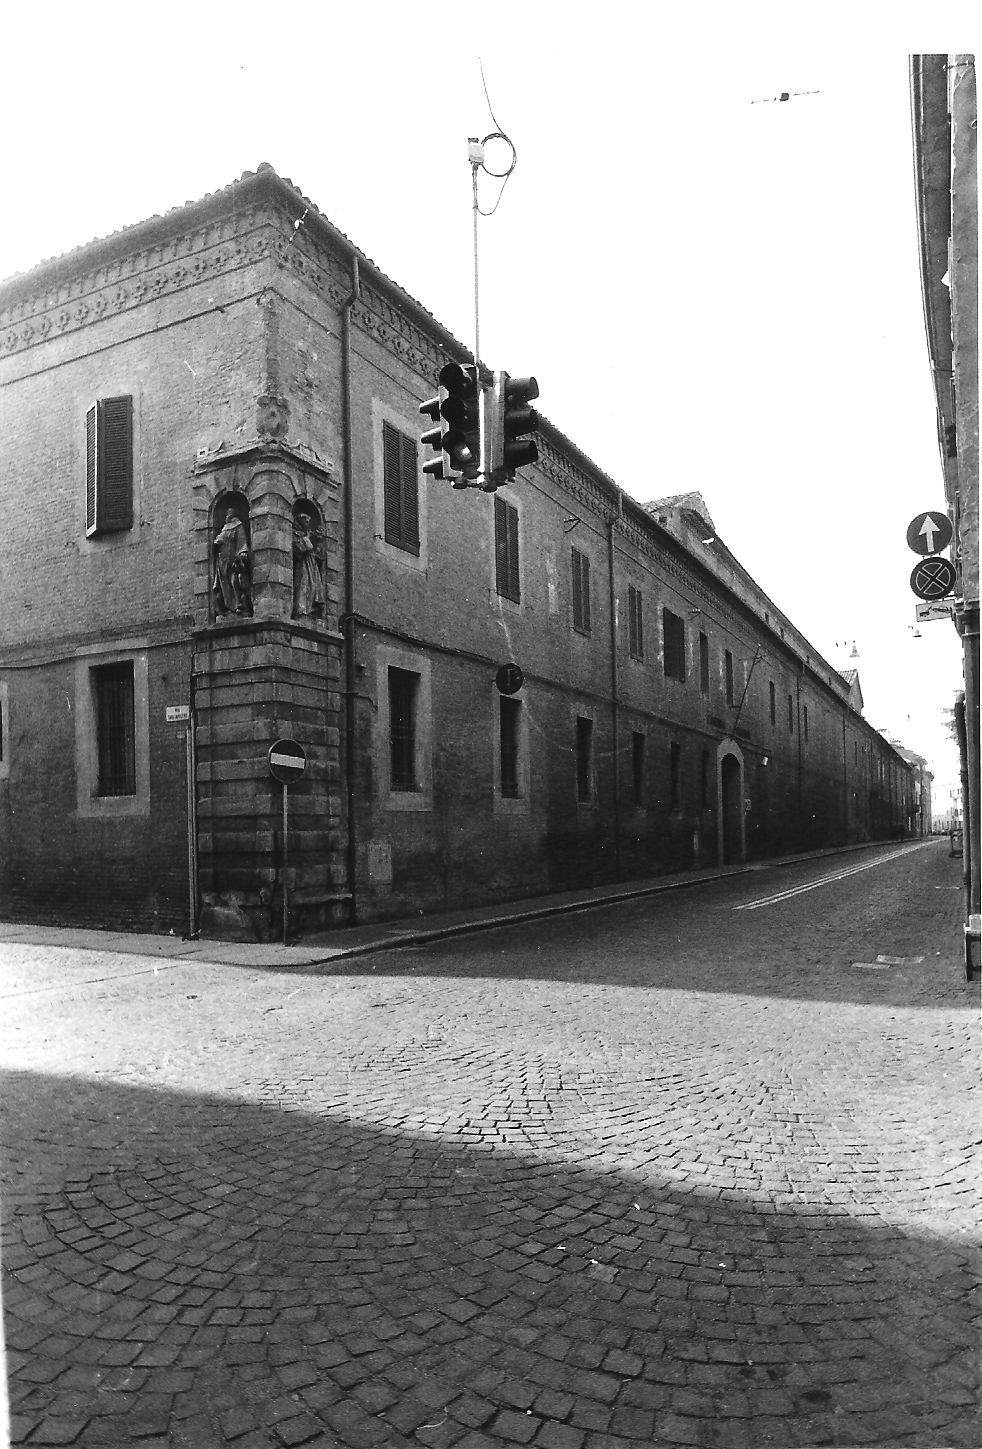 Ex convento del Corpus Domini delle Clarisse (convento, delle Clarisse) - Bologna (BO) 